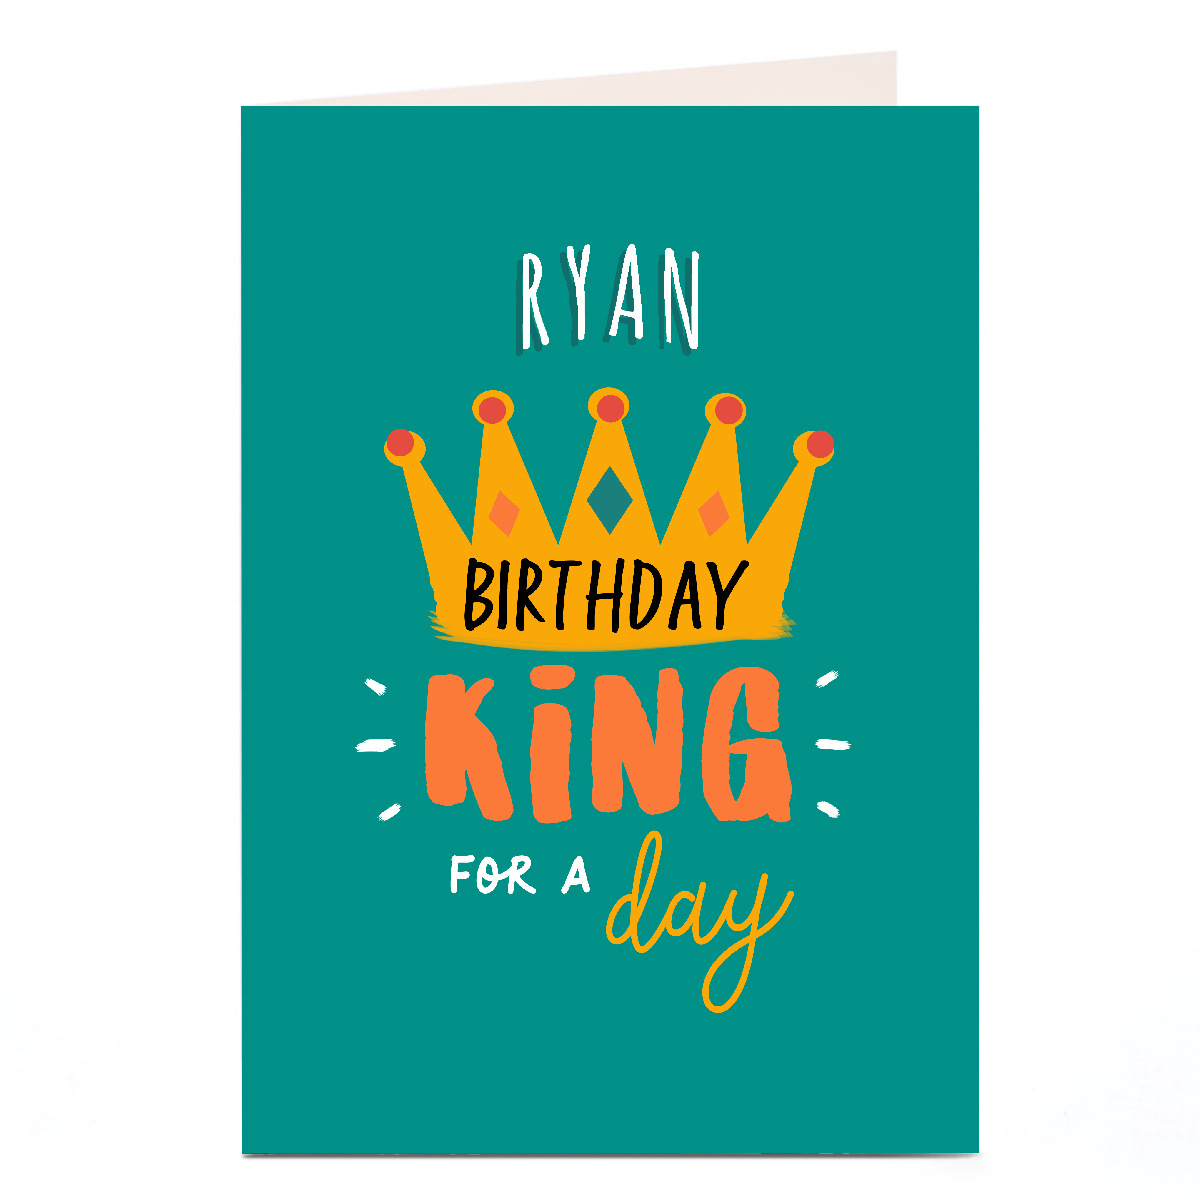 Personalised Birthday Card - Birthday King